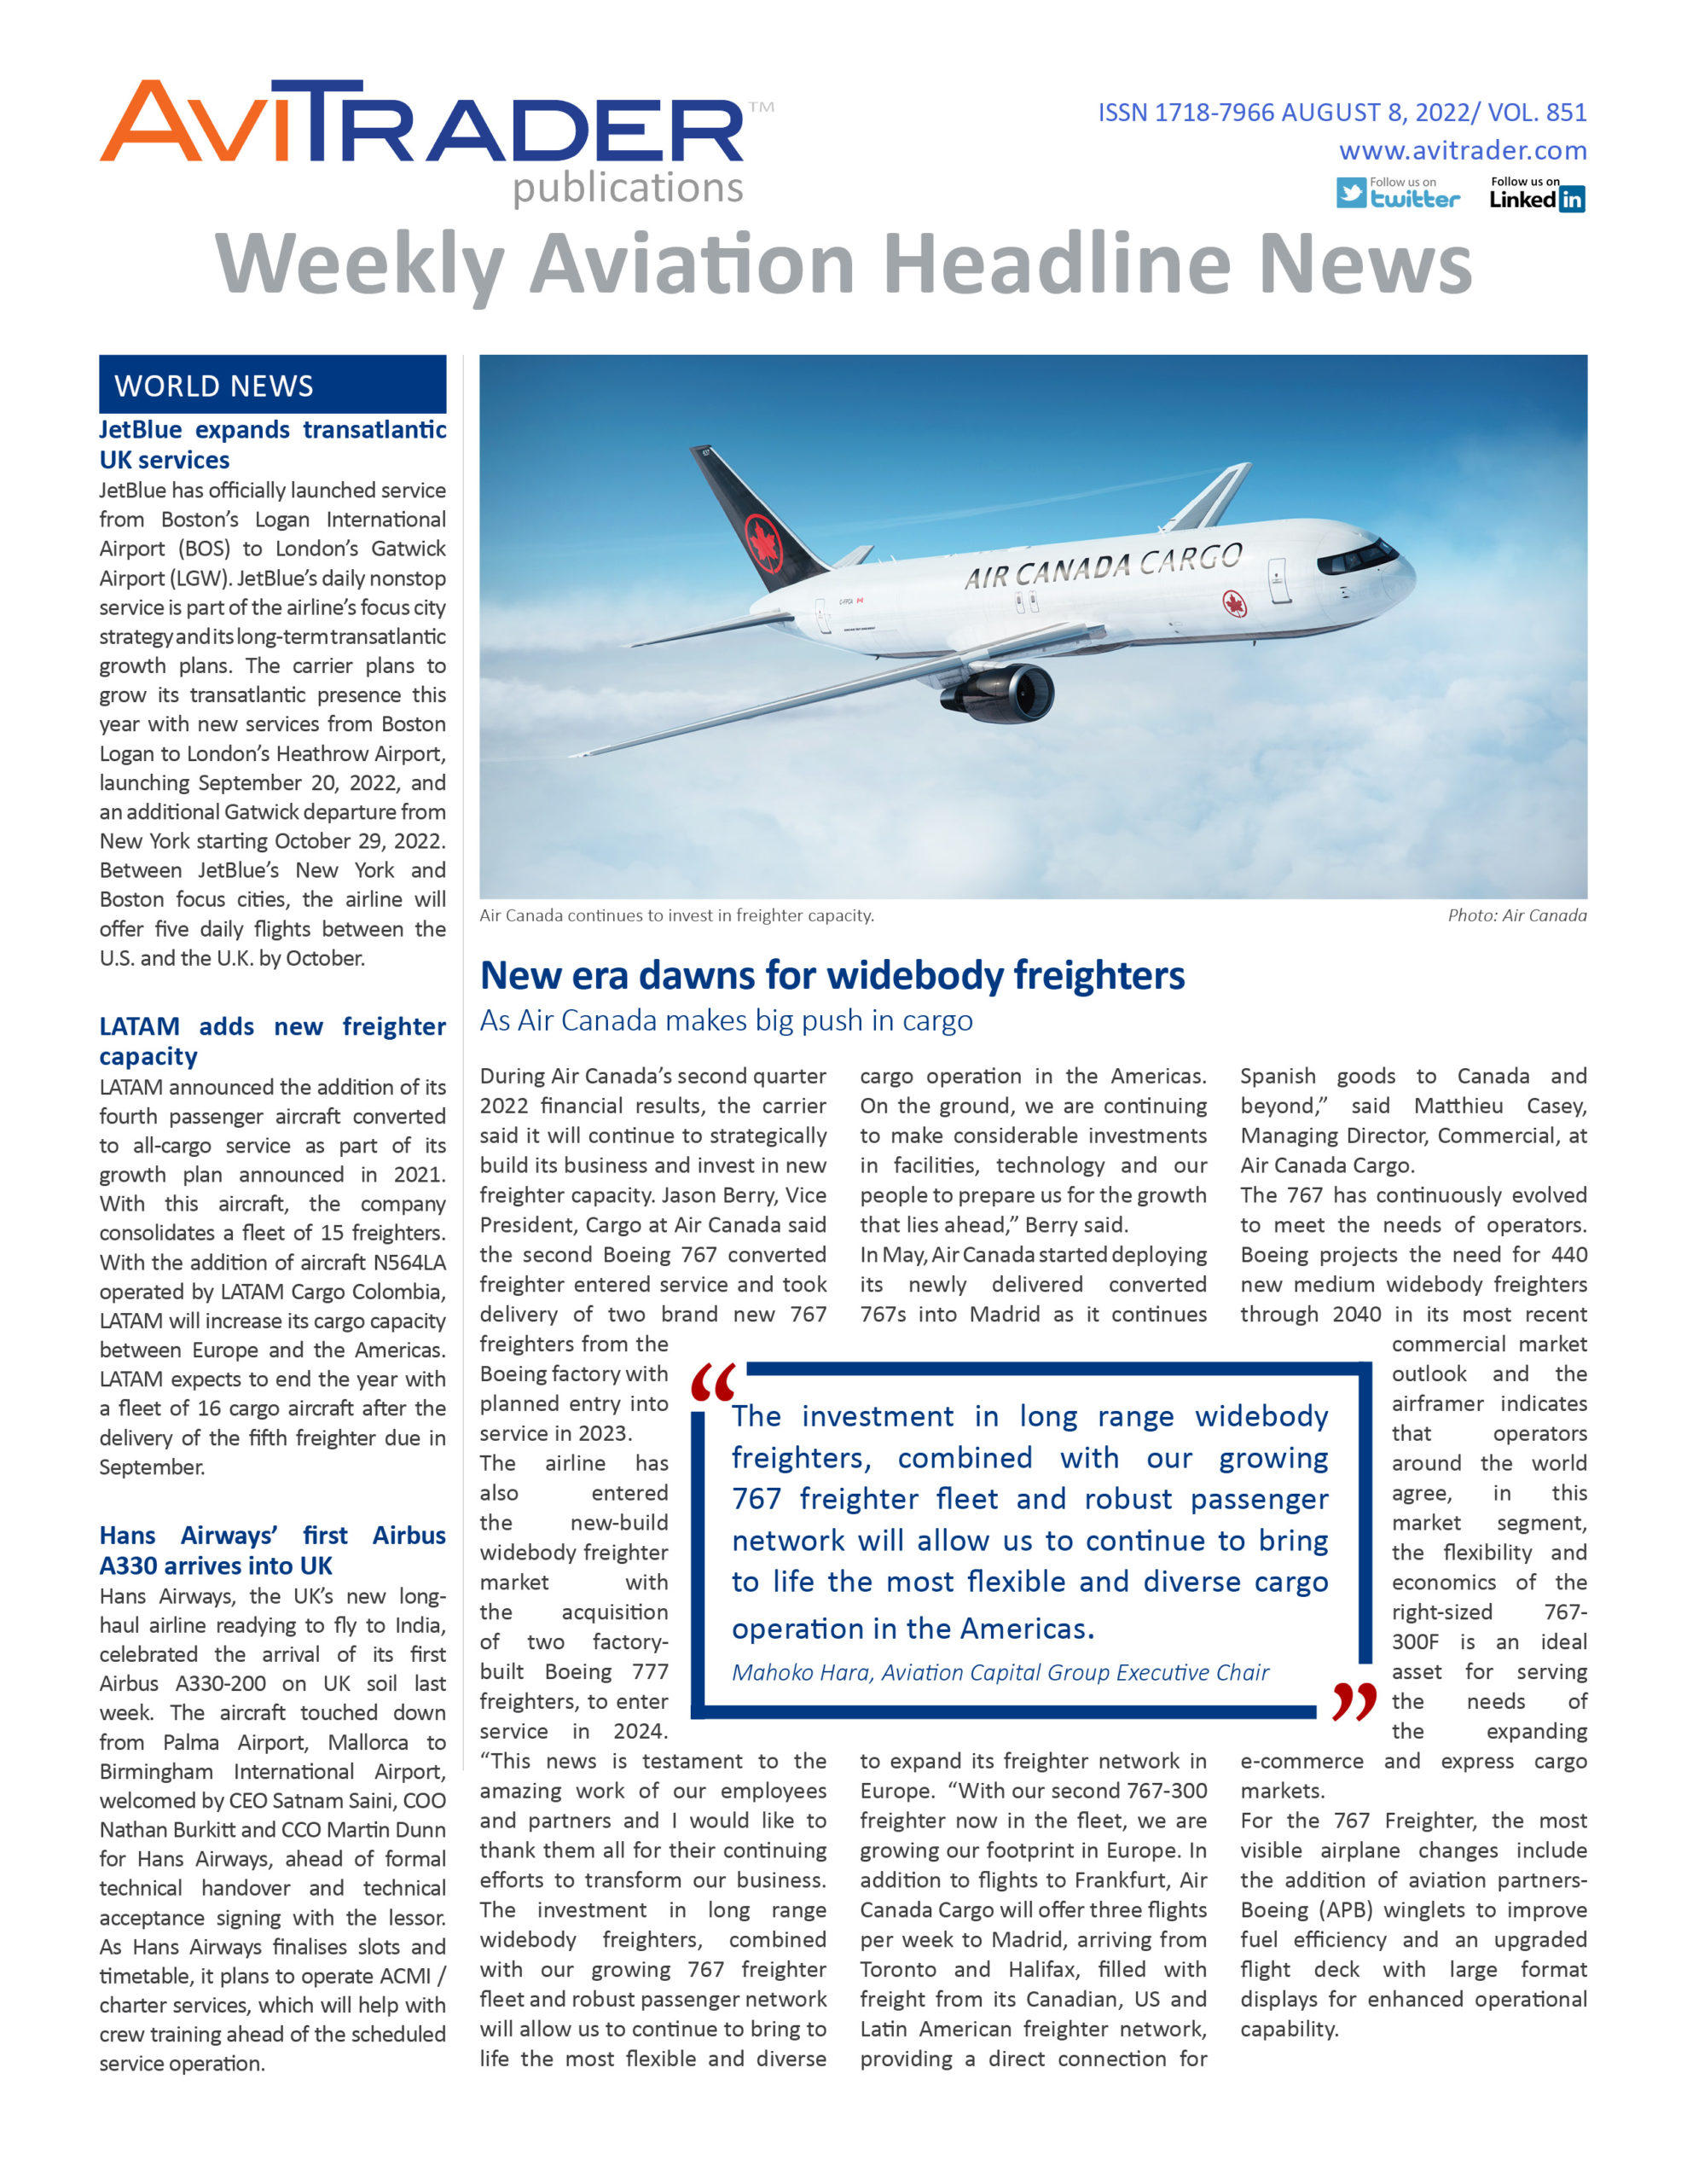 AviTrader_Weekly_Headline_News_Cover_2022-08-08